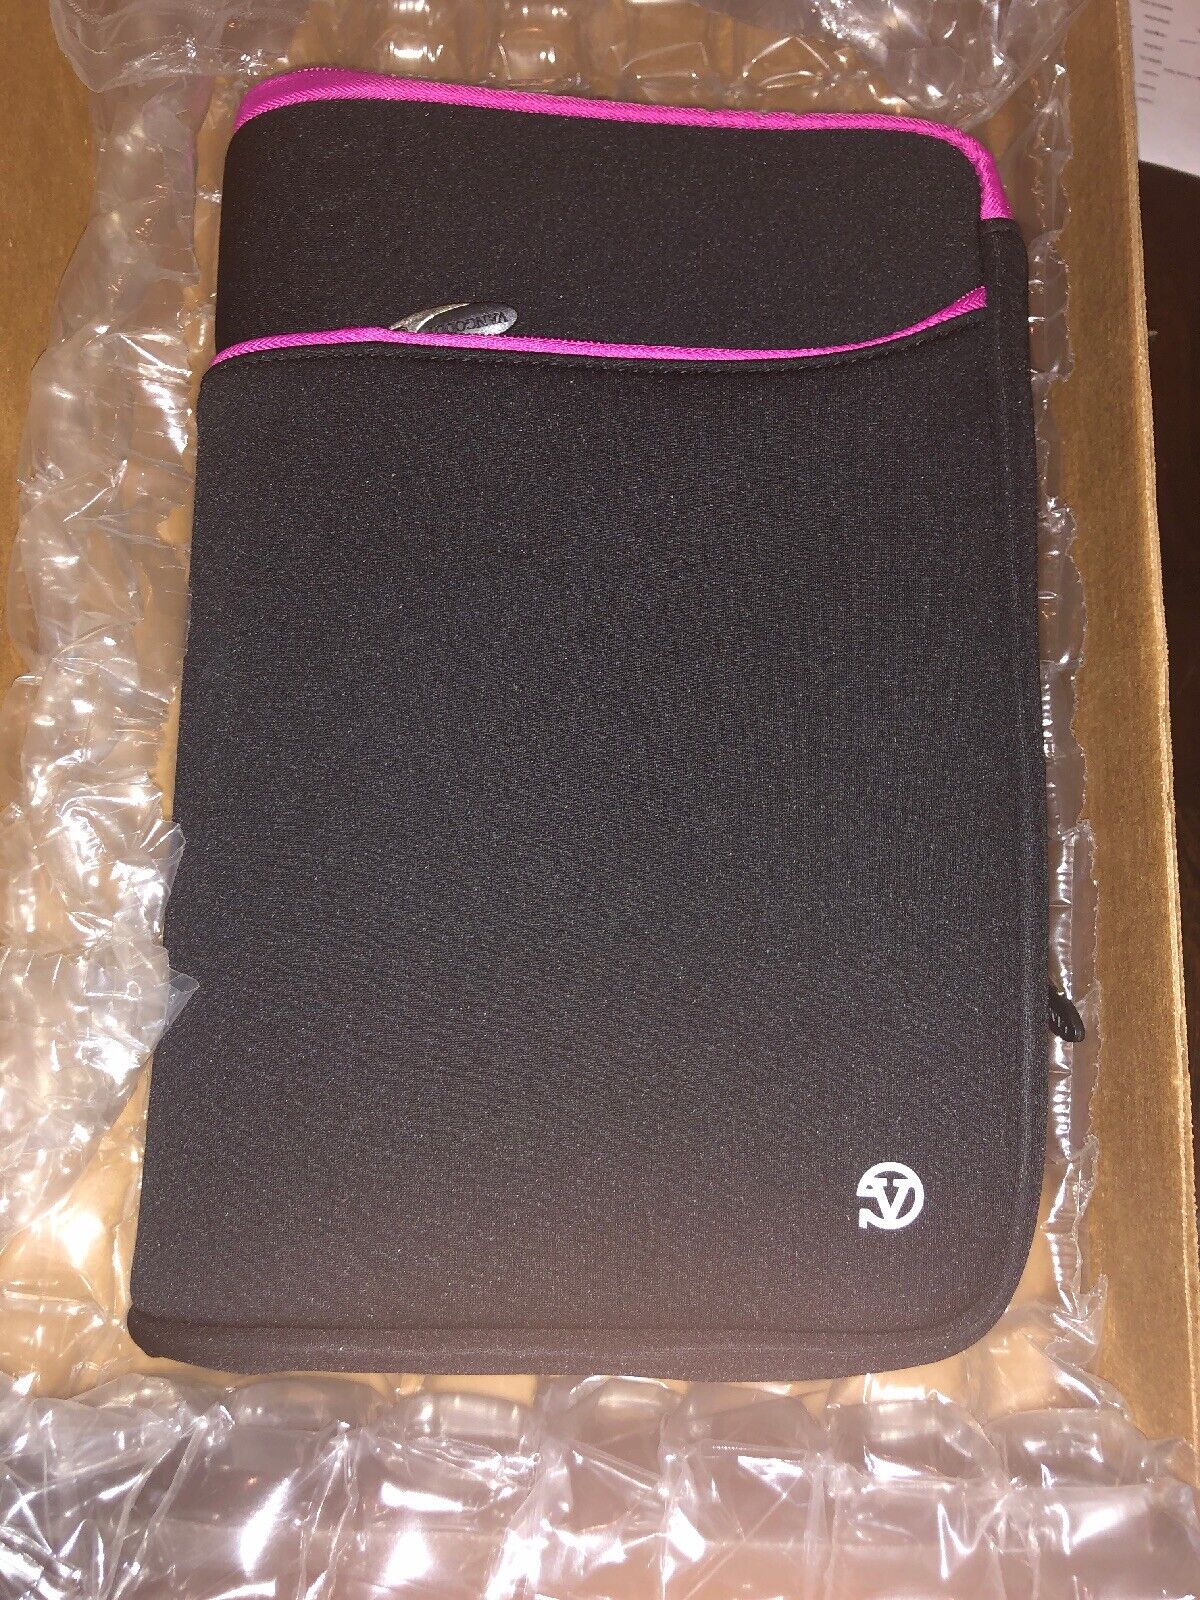 Vangoddy NBLEA257 Neoprene Laptop / Ultrabook Slim Compact Carrying Sleeve